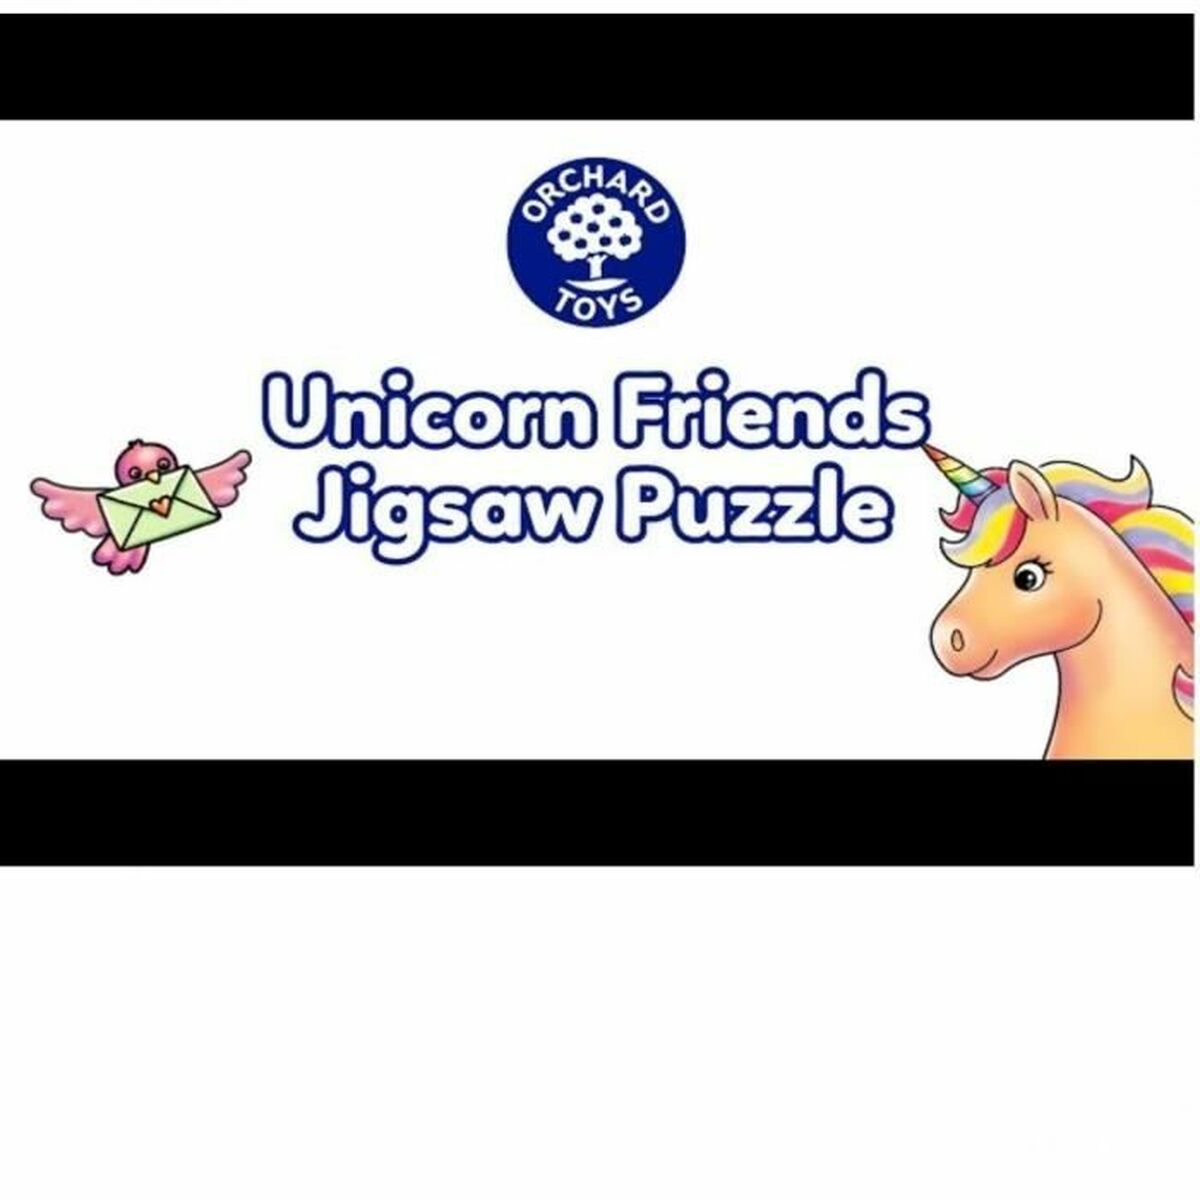 Puzzel Orchard Unicorn Friends (FR)